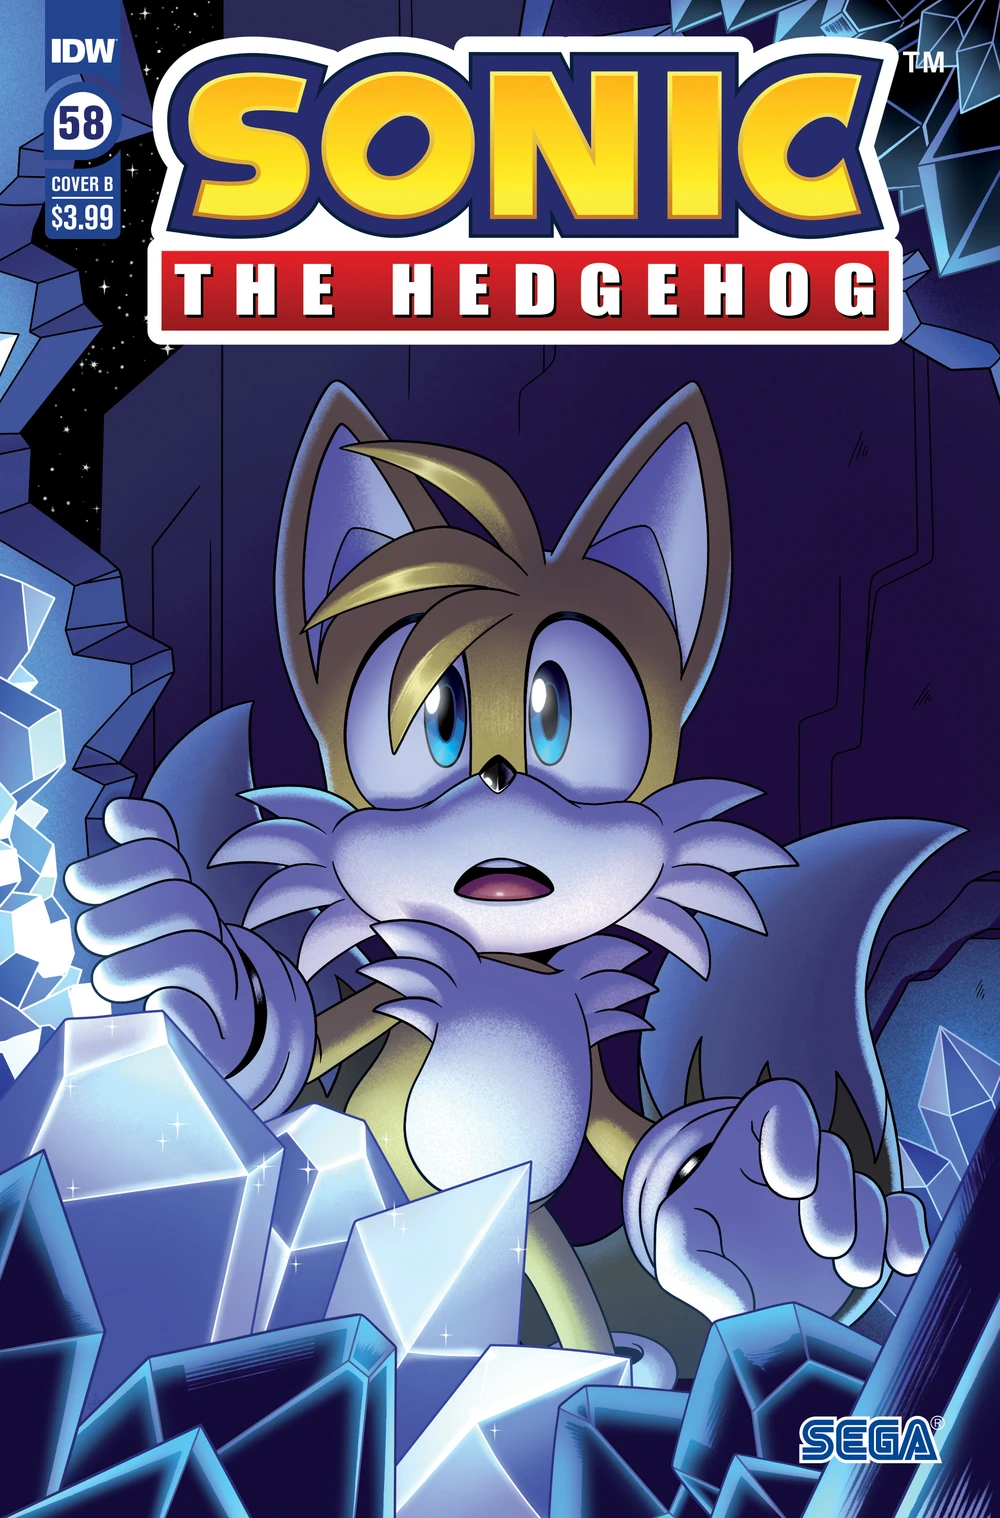 Sonic The Hedgehog #58 Cover B